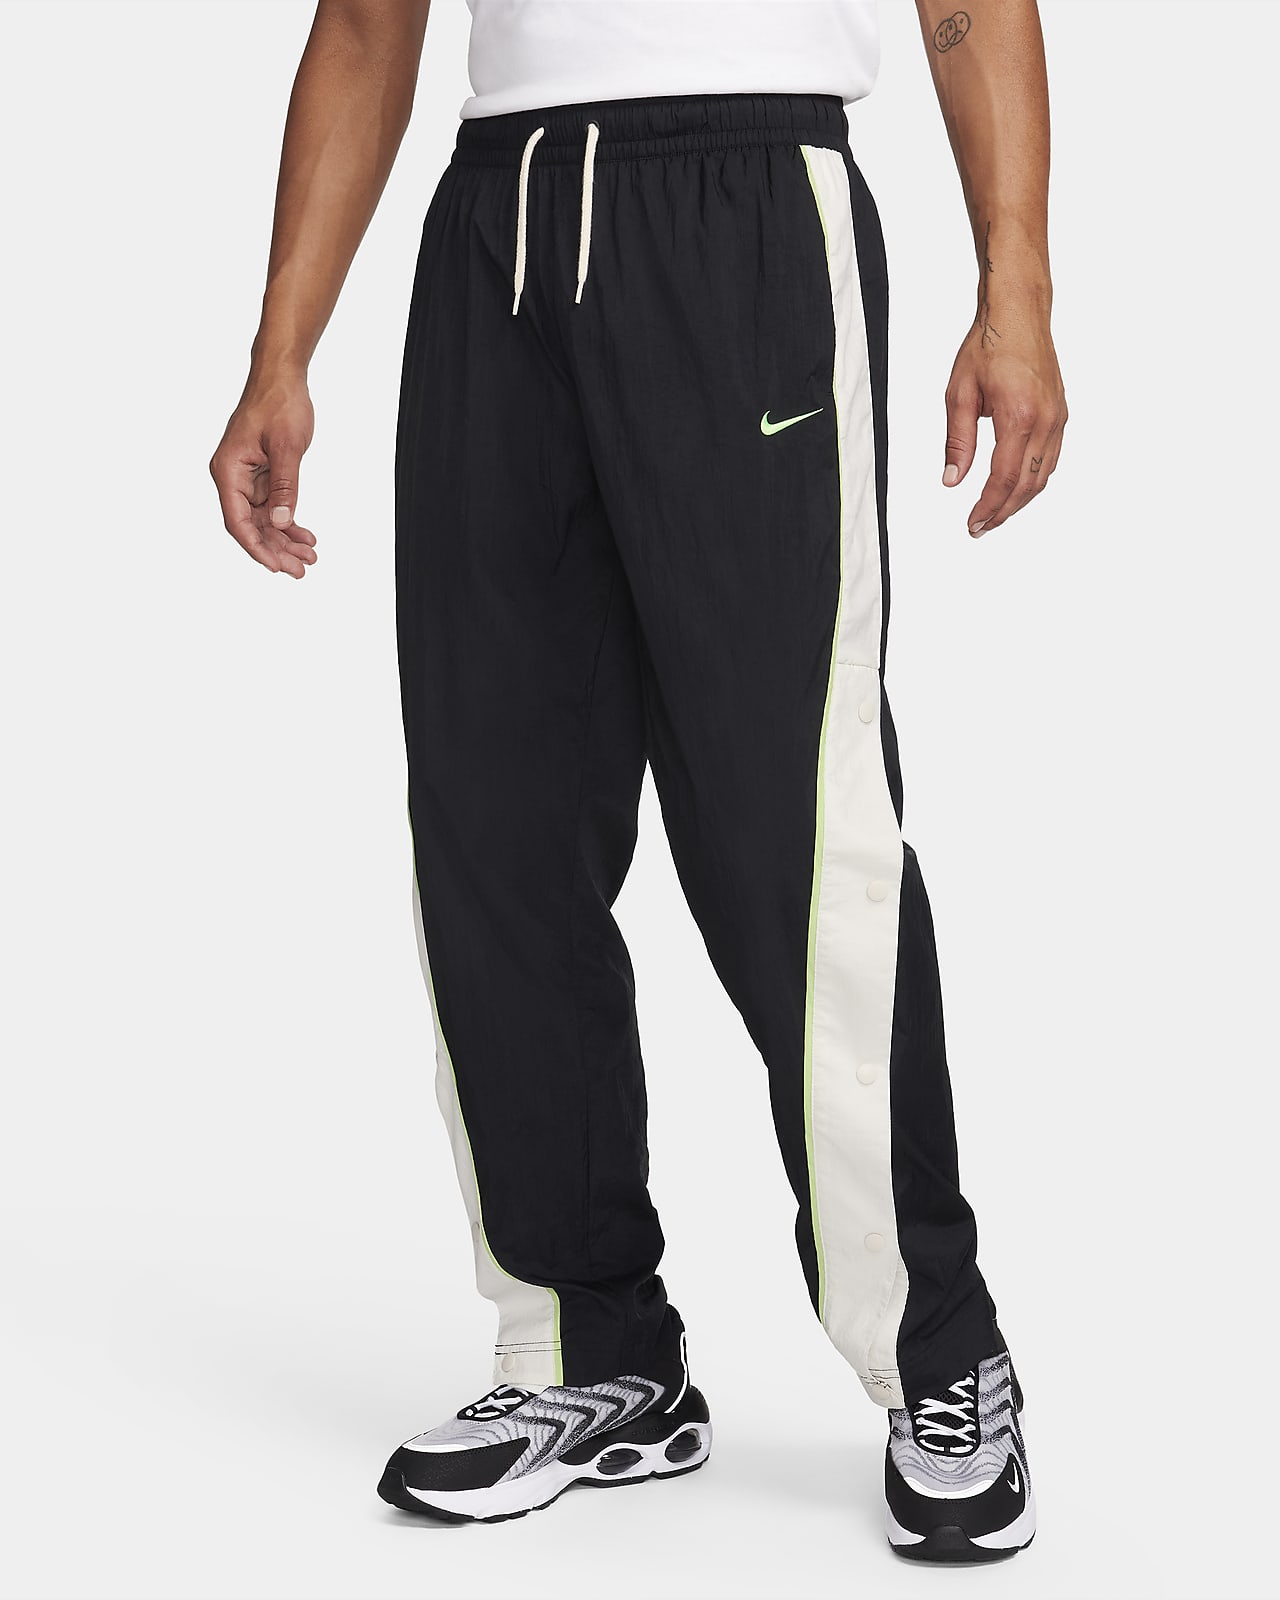 Nike Men's Woven Basketball Trousers